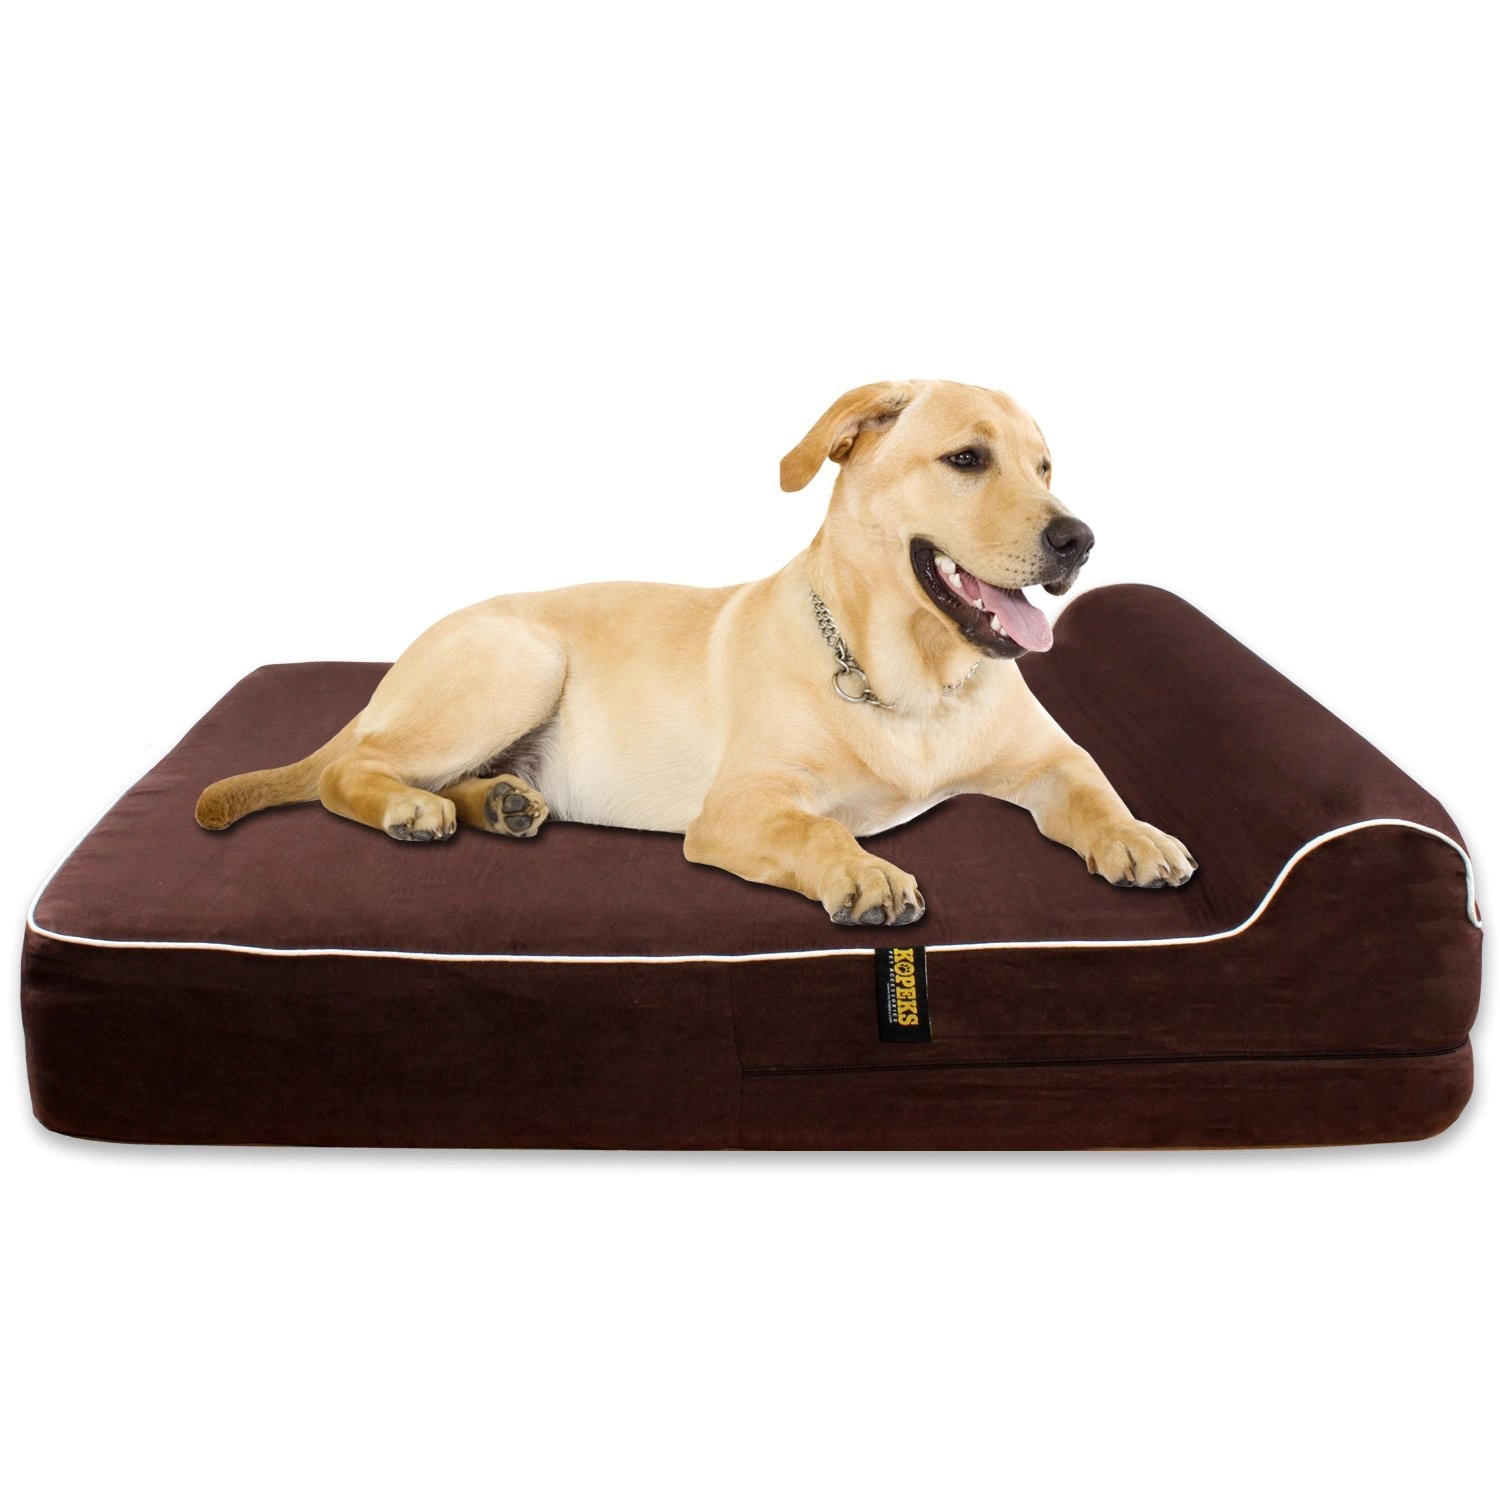 amazoncom barksbar large gray orthopedic dog bed x dog beds and f843d98789d42745